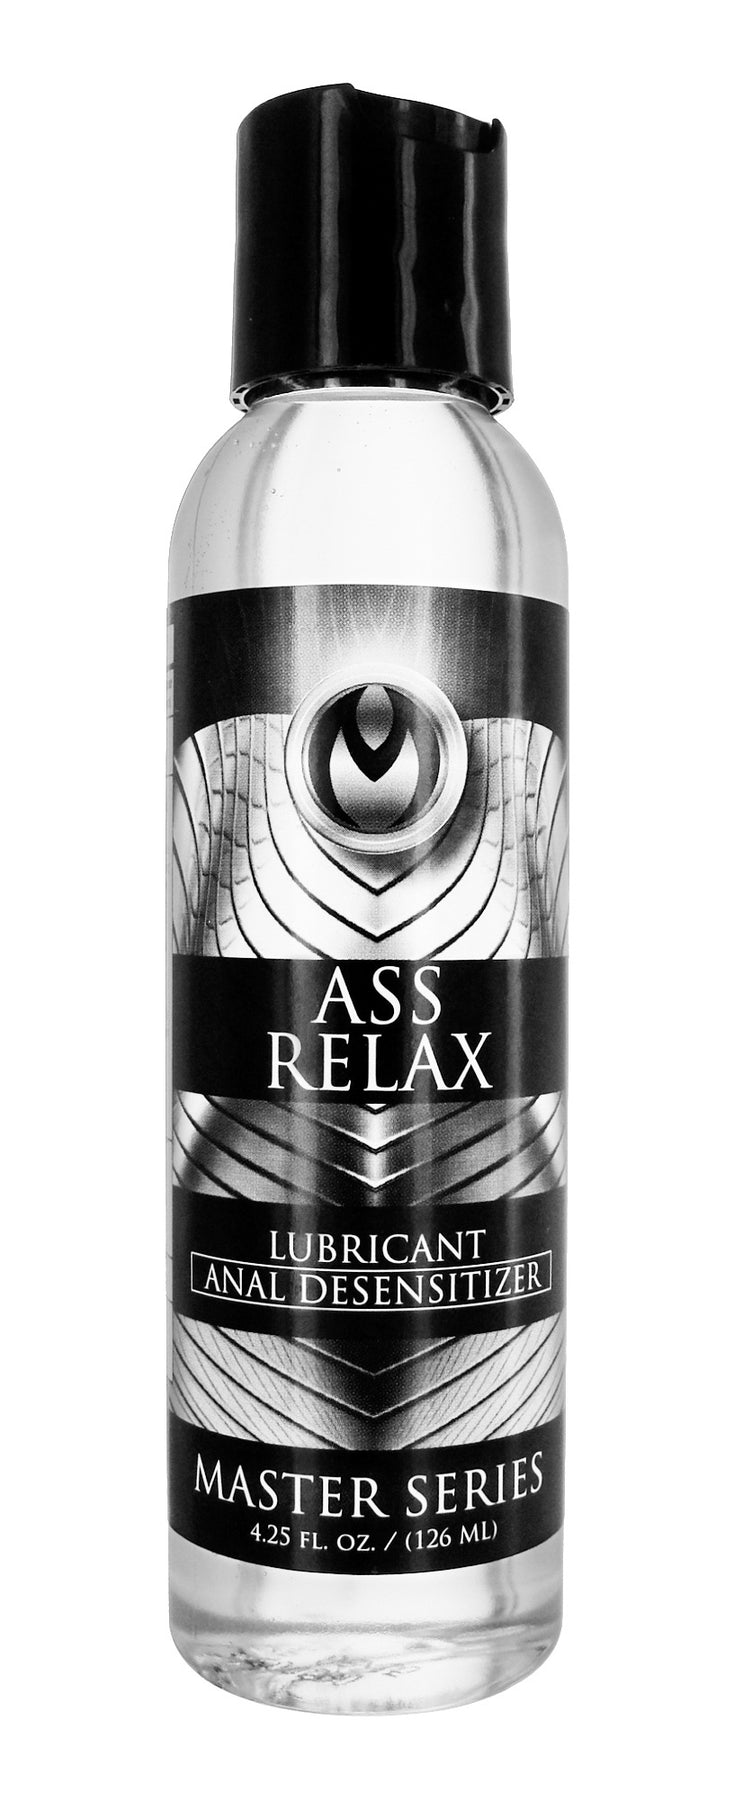 Ass relax lubricant anal desensitizer